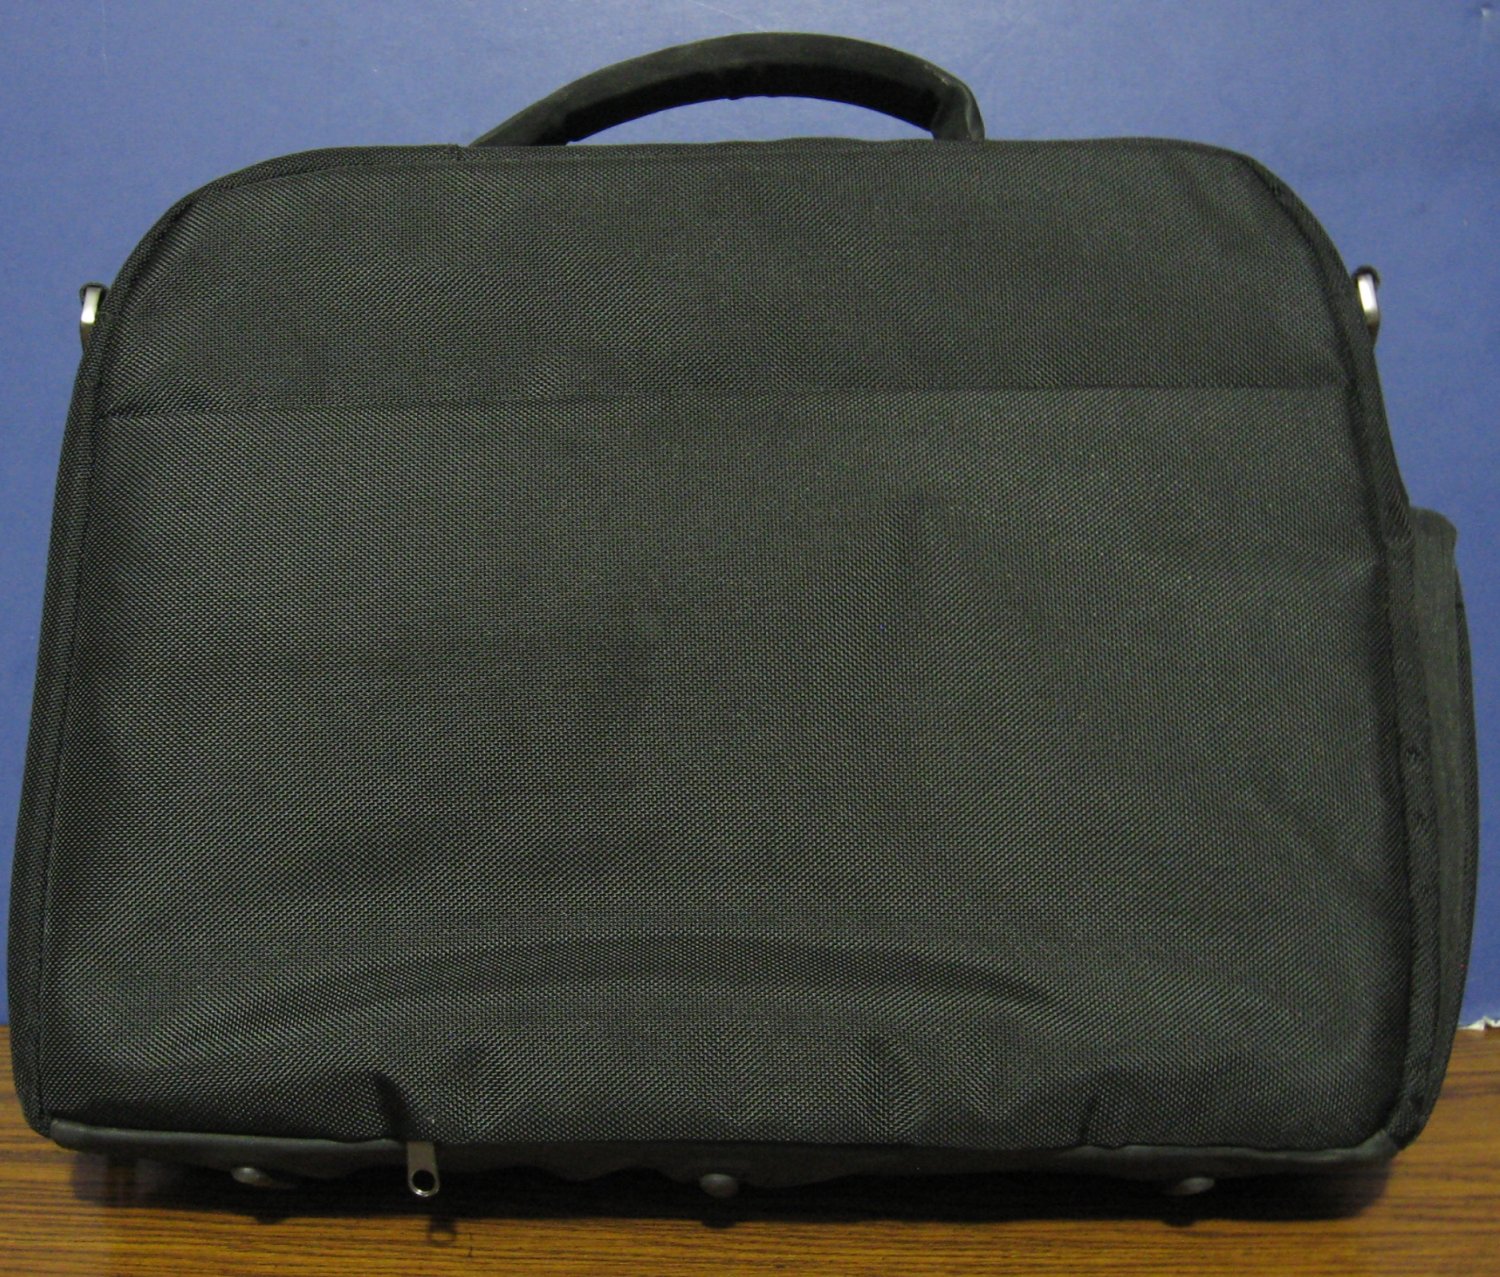 Hewlett Packard Professional Series Laptop Bag 592733-001 - Top Load ...